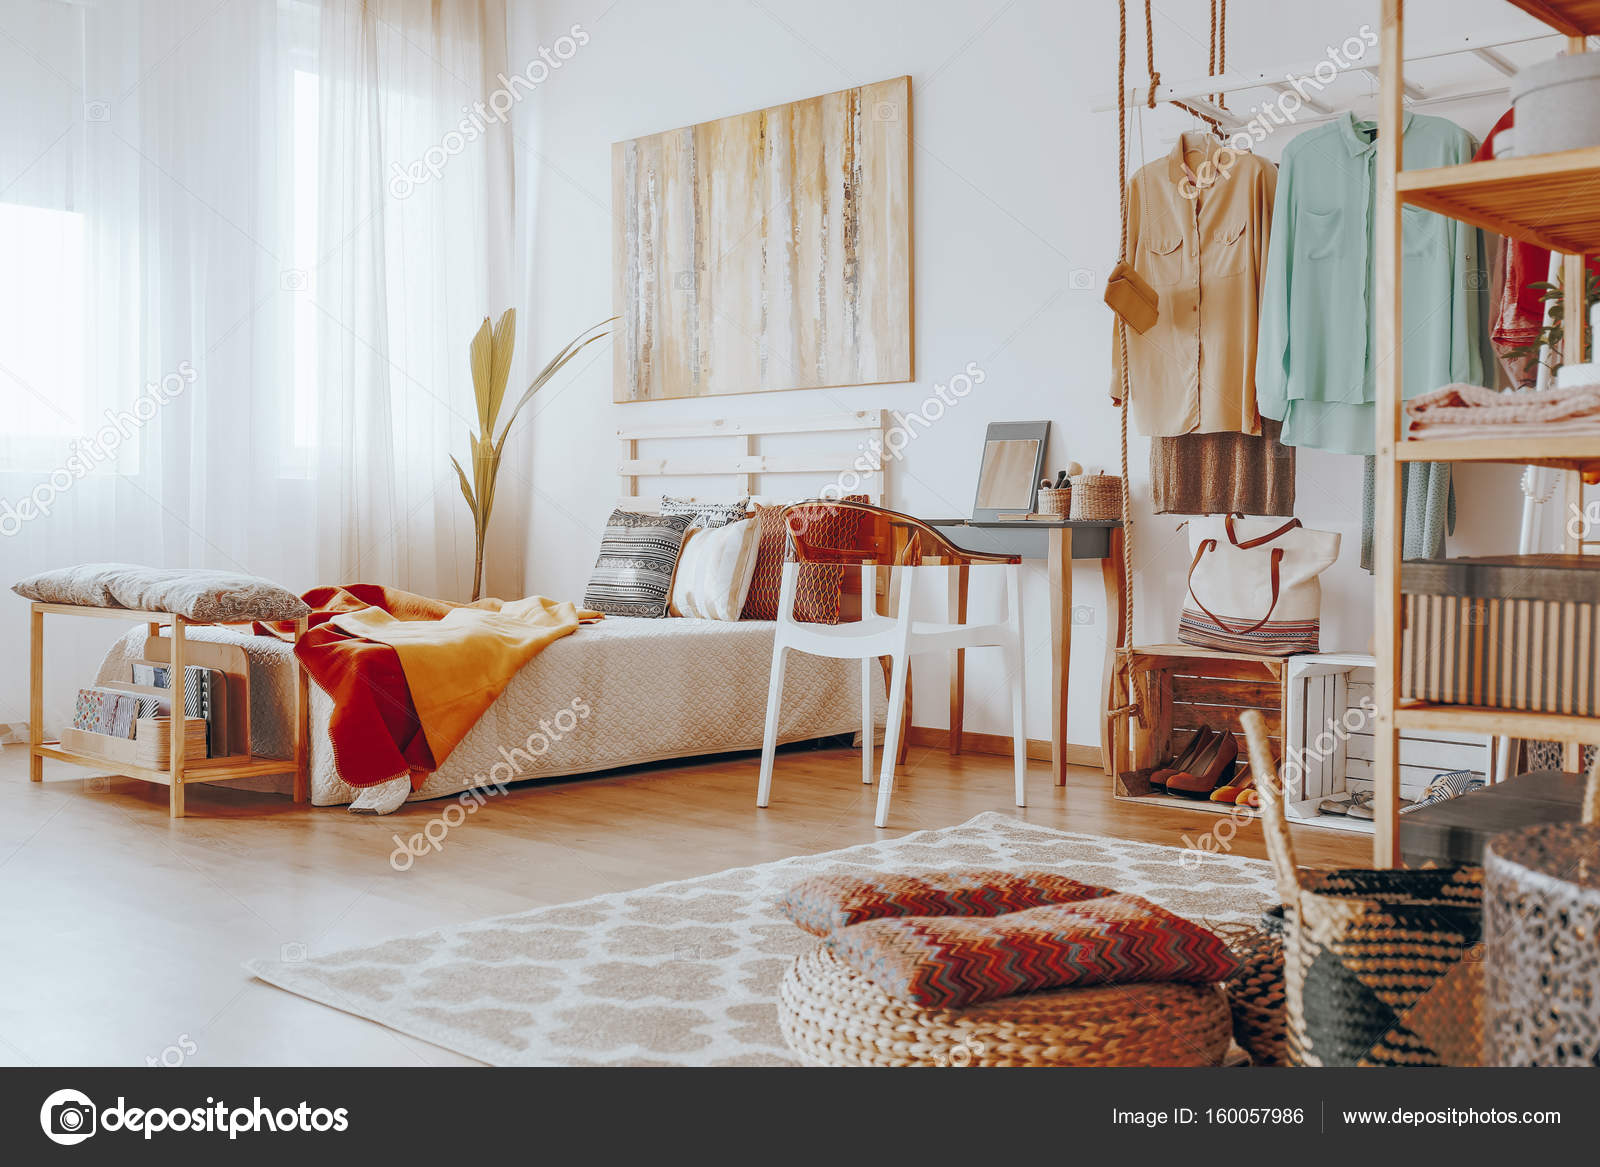 Dormitorio con estilo boho — Foto de stock © photographee.eu #160057986